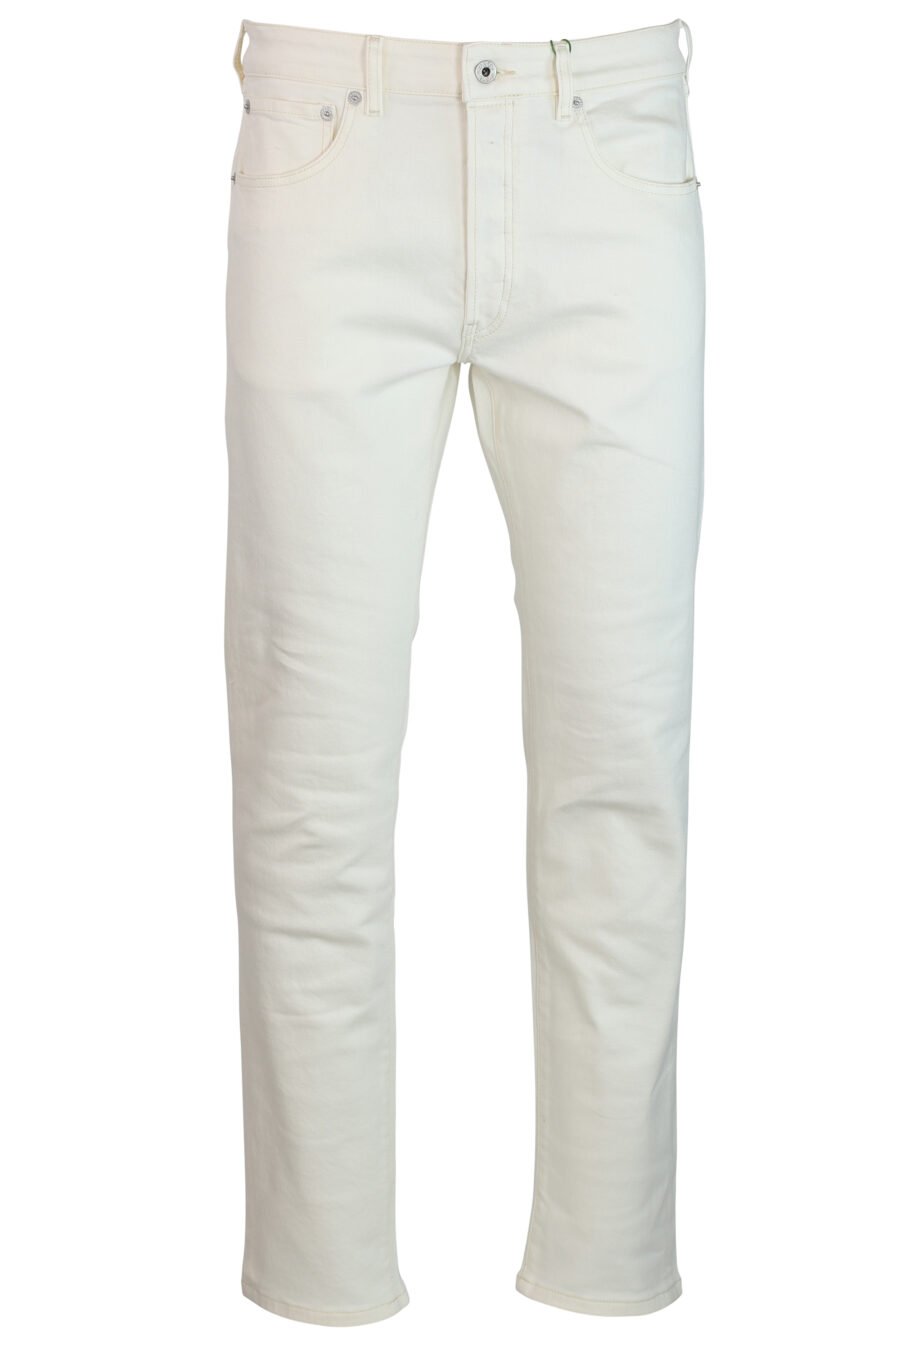 White denim trousers with mini logo - IMG 0290